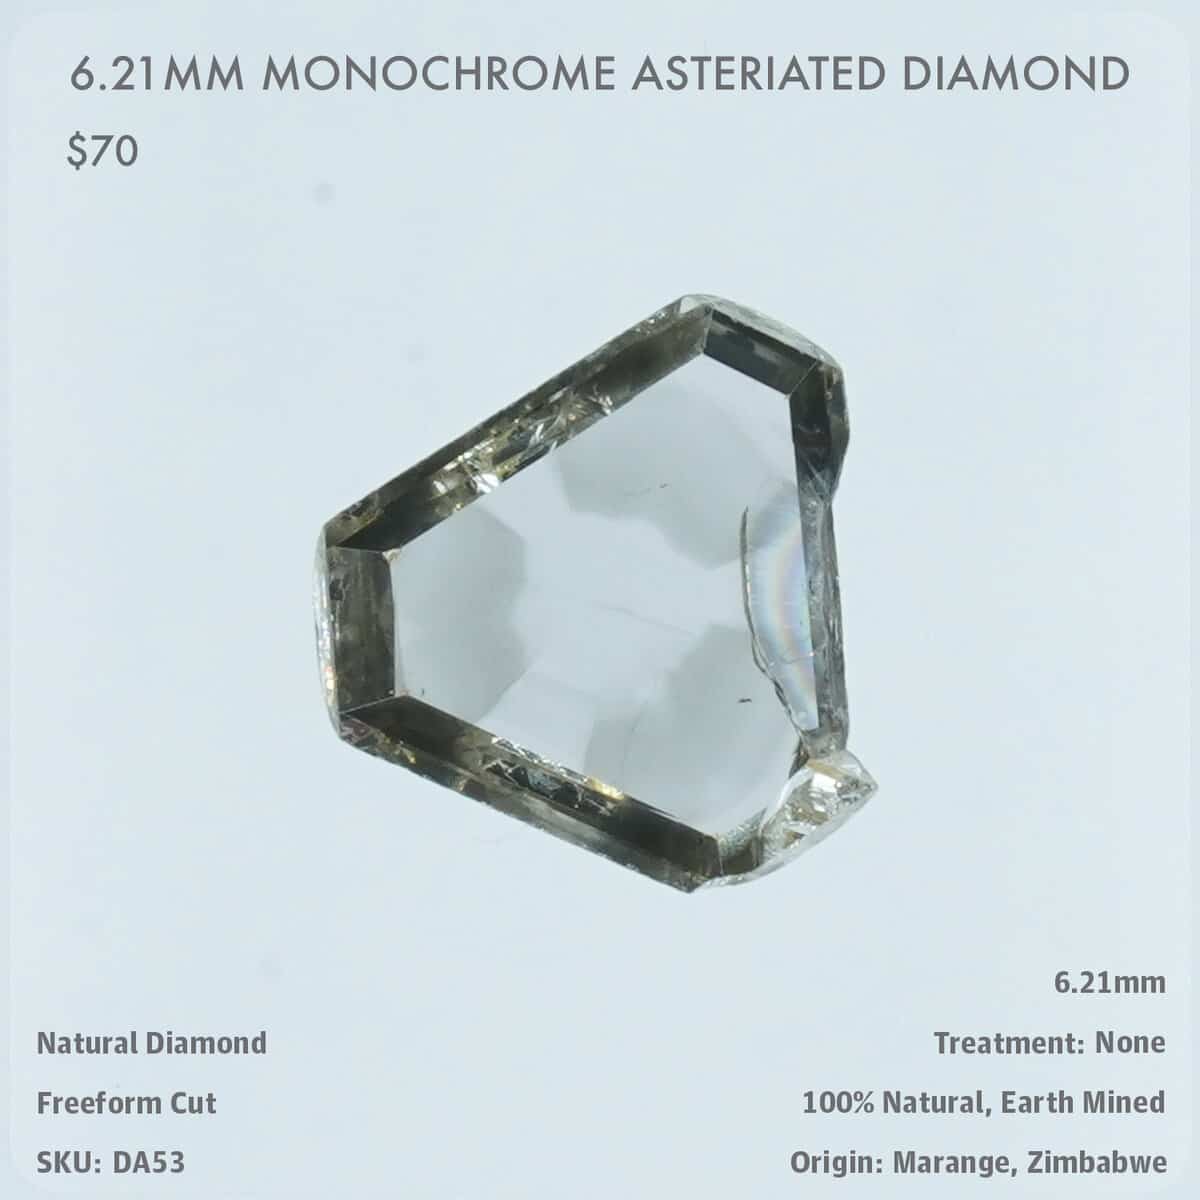 6.21mm Monochrome Asteriated Diamond